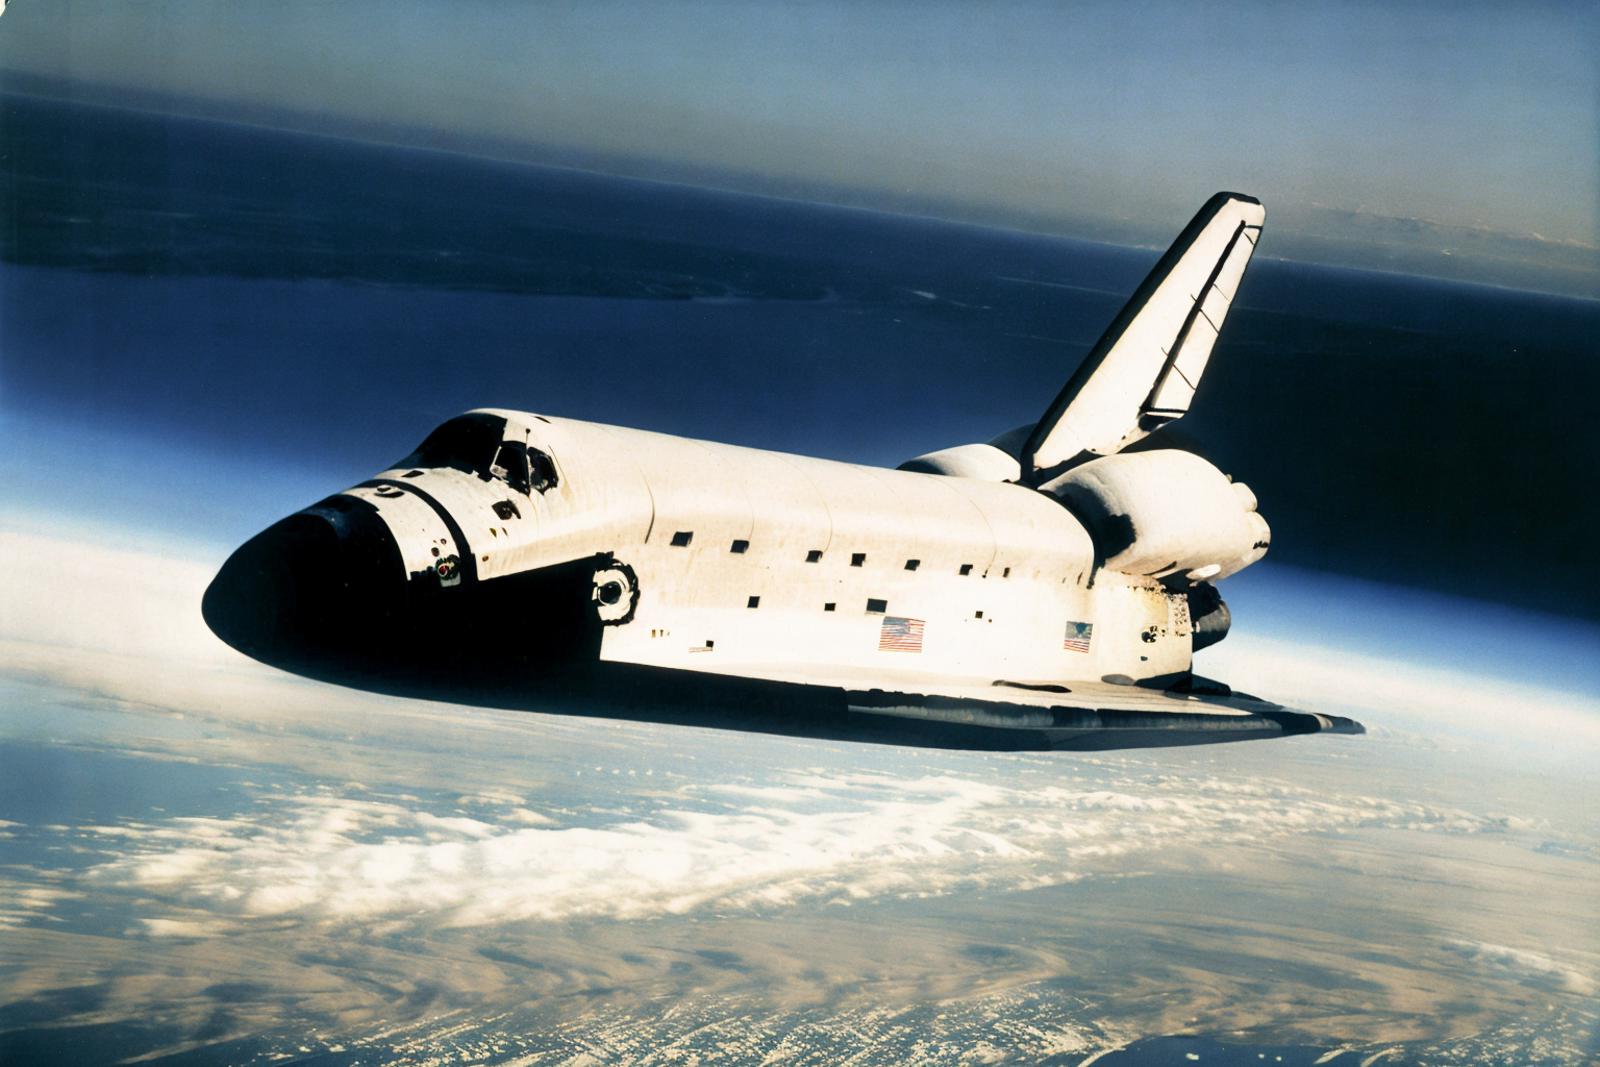 NASA Space Shuttle orbiter (1977) image by XX007